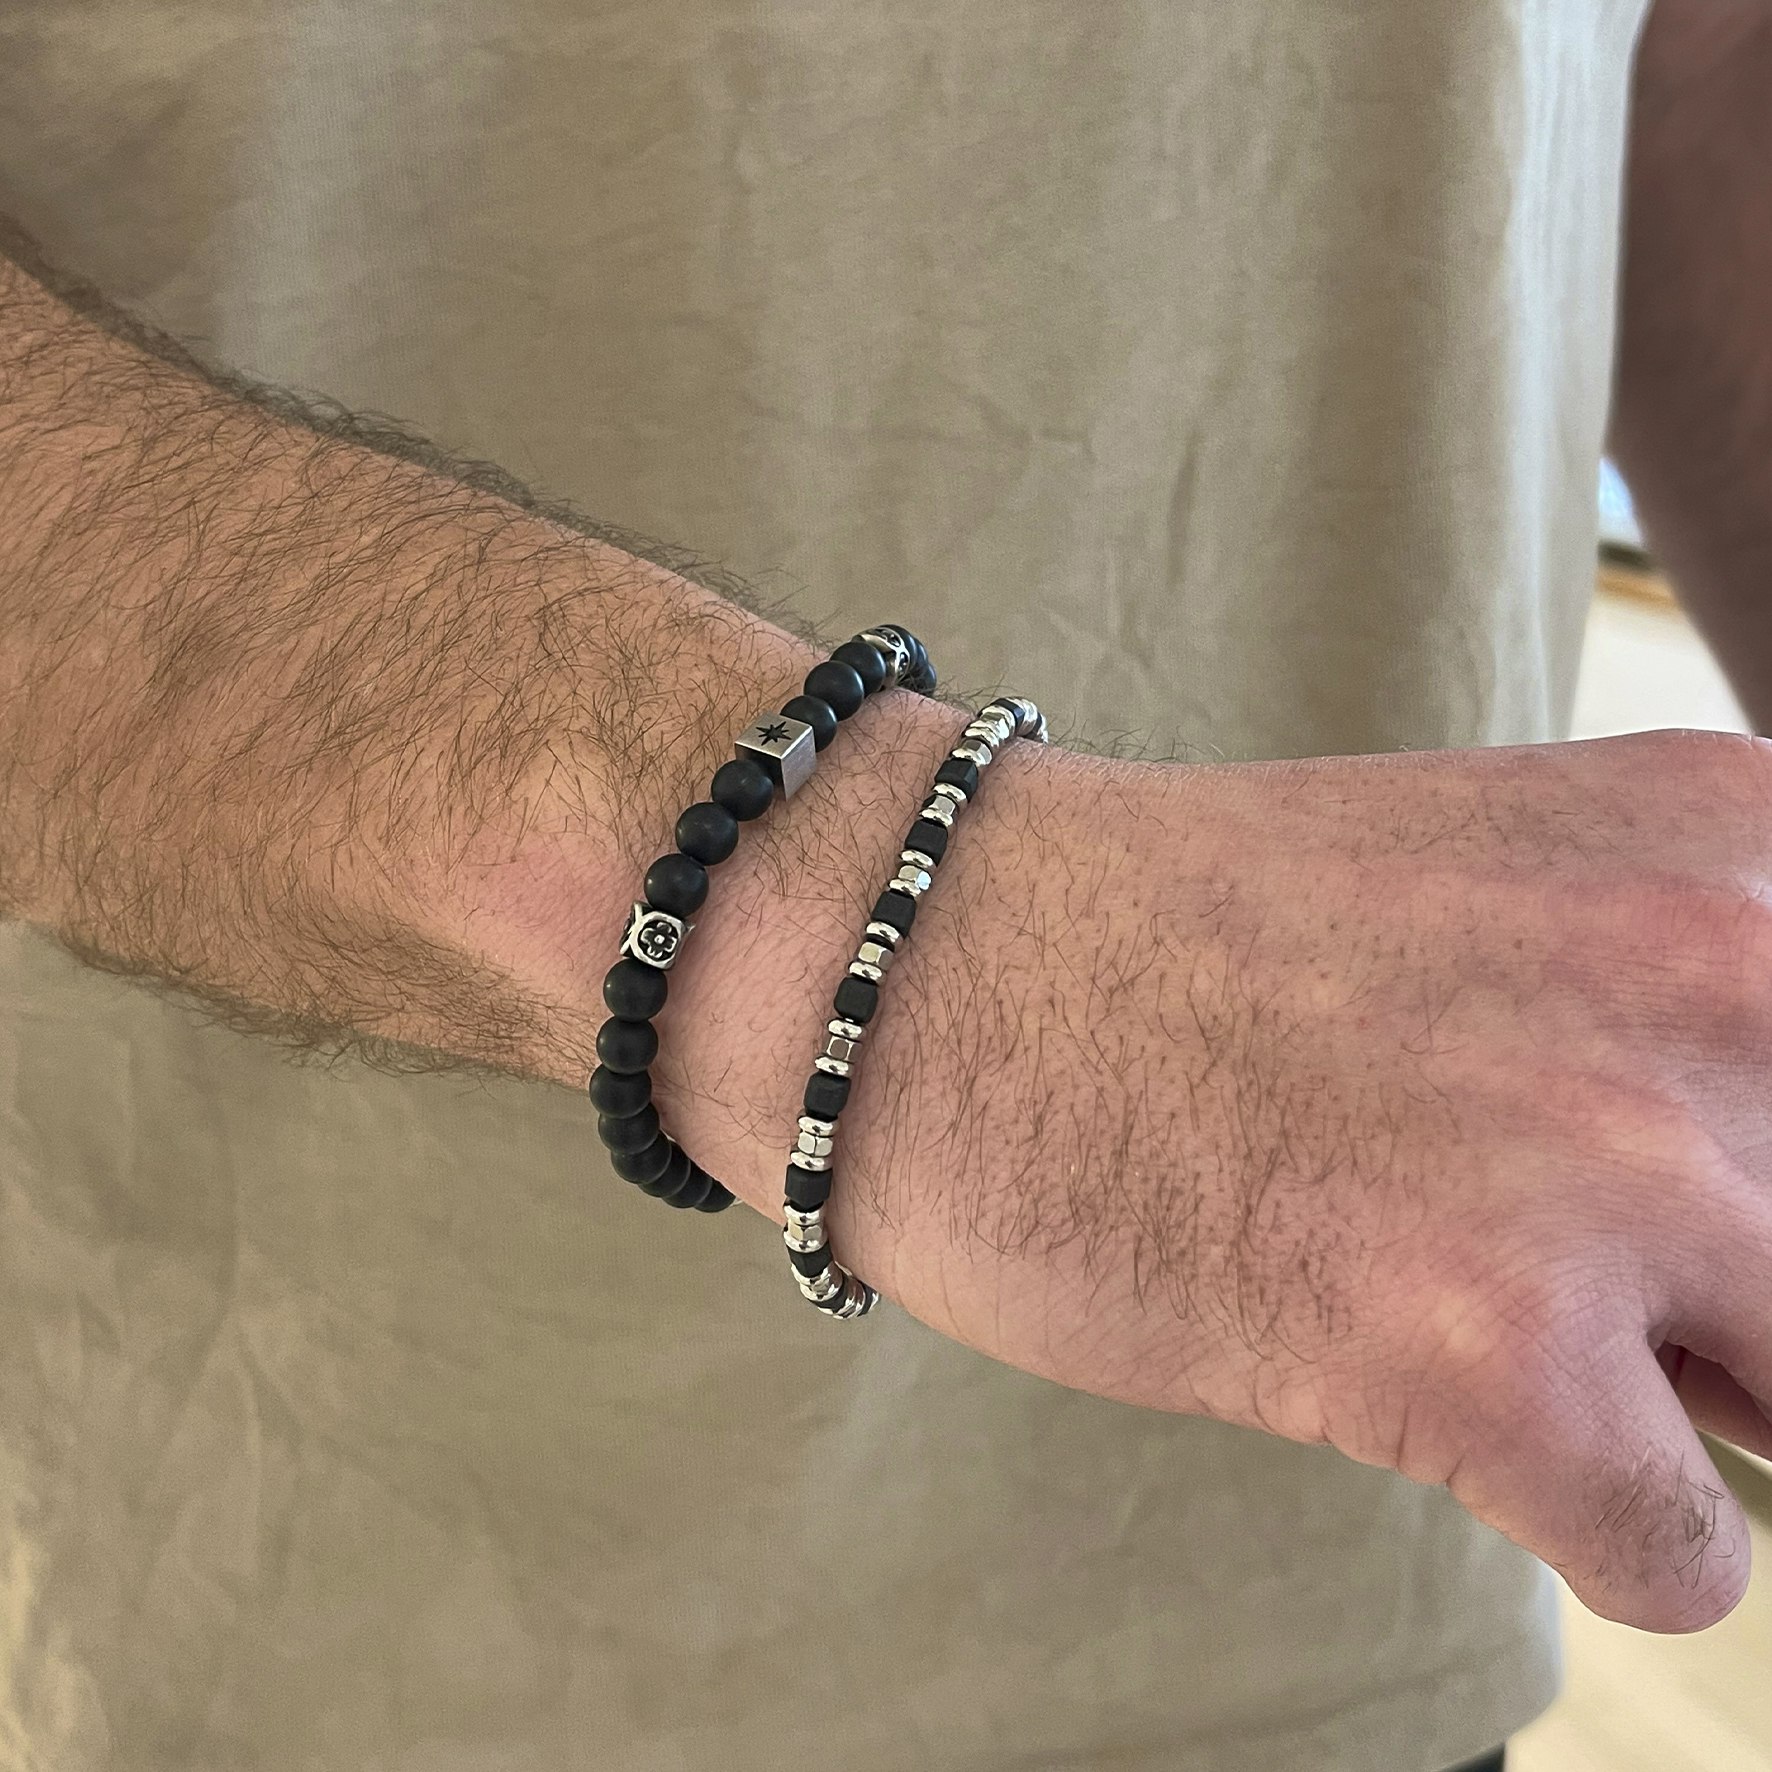 Nohr Bracelet Black Beads from SAMIE in Stainless steel